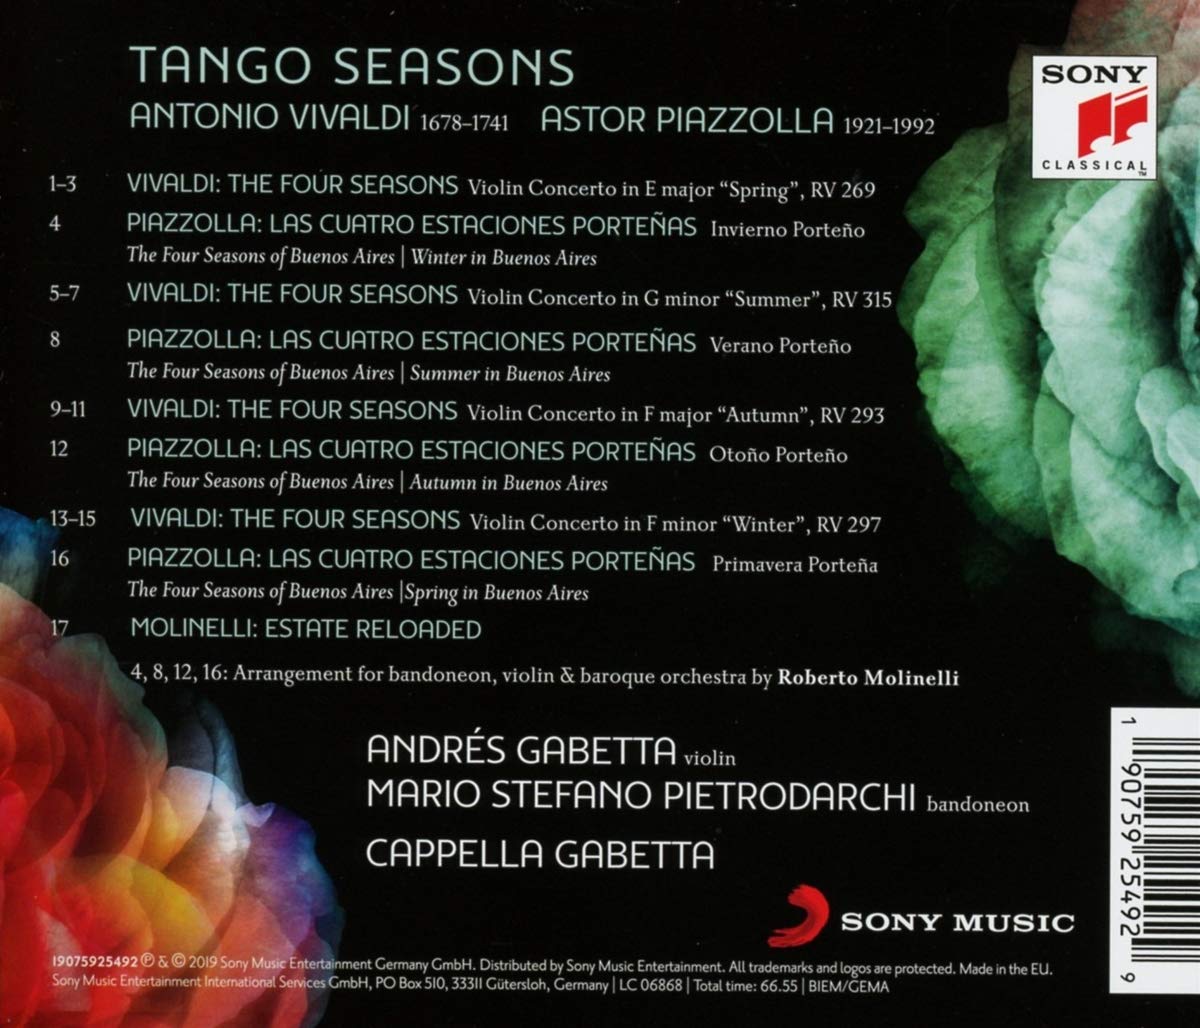 Tango Seasons | Cappella Gabetta, Andres Gabetta, Mario Stefano Pietrodarchi image1